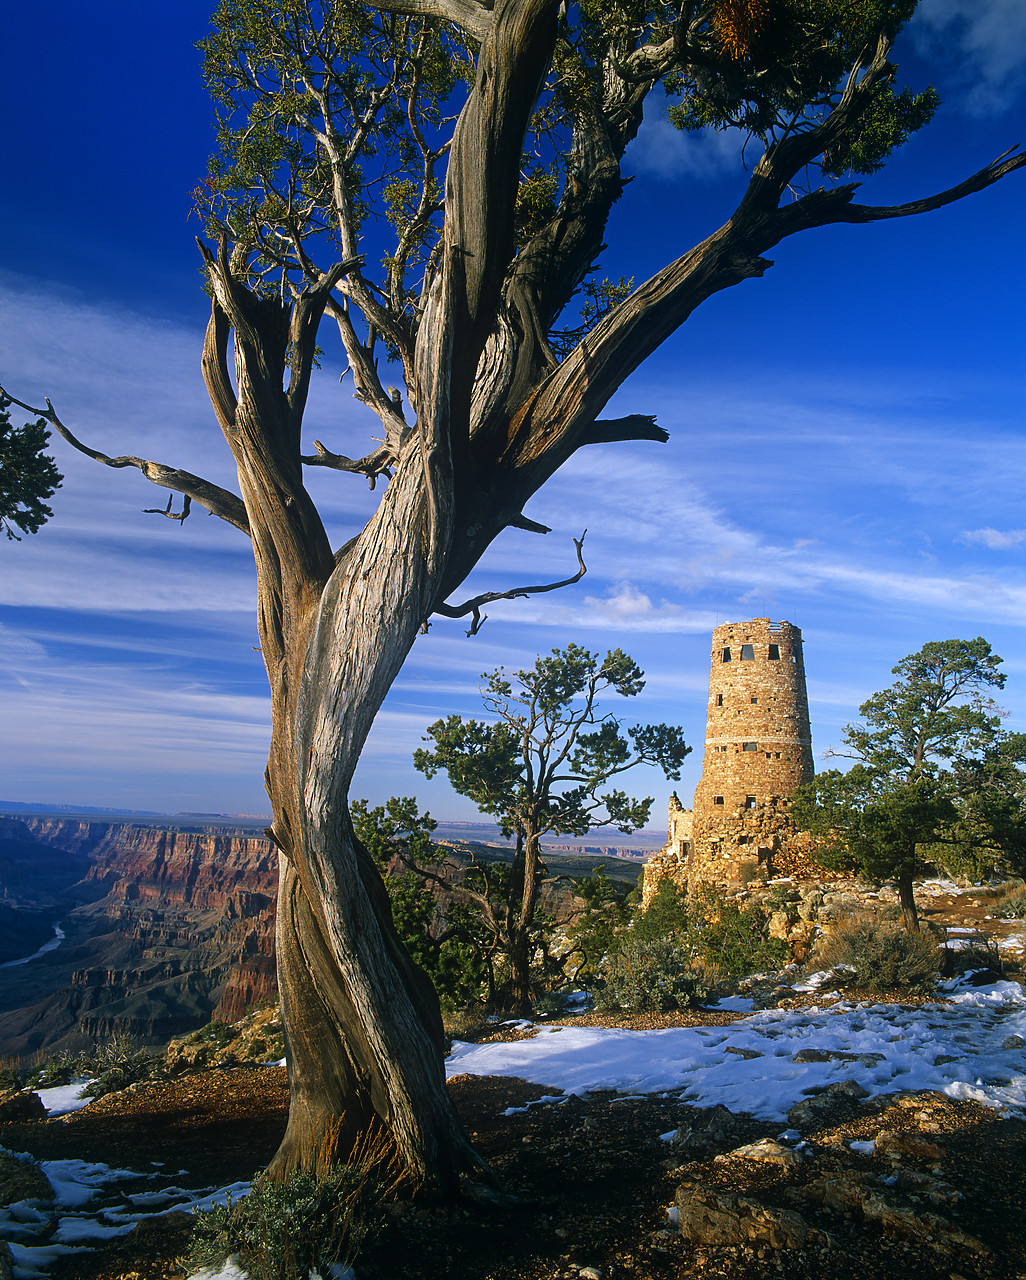 #980782-3 - The Watchtower at Desert View, Grand Canyon National Park, Arizona, USA